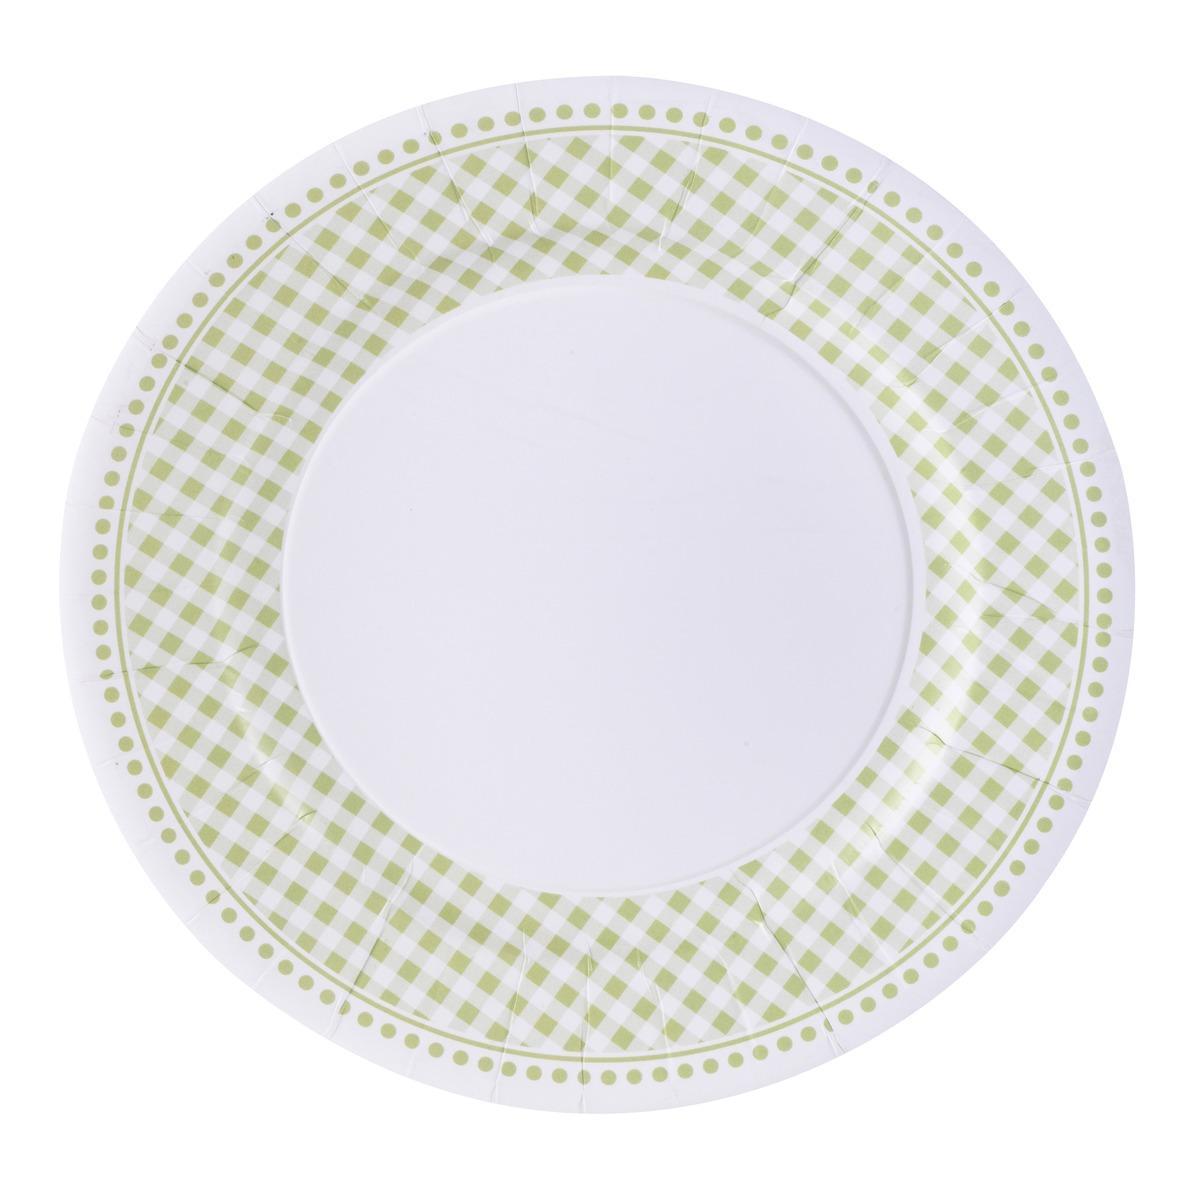 Lot de 10 assiettes en carton motif vichy - Diamètre 23 cm - Vert, blanc